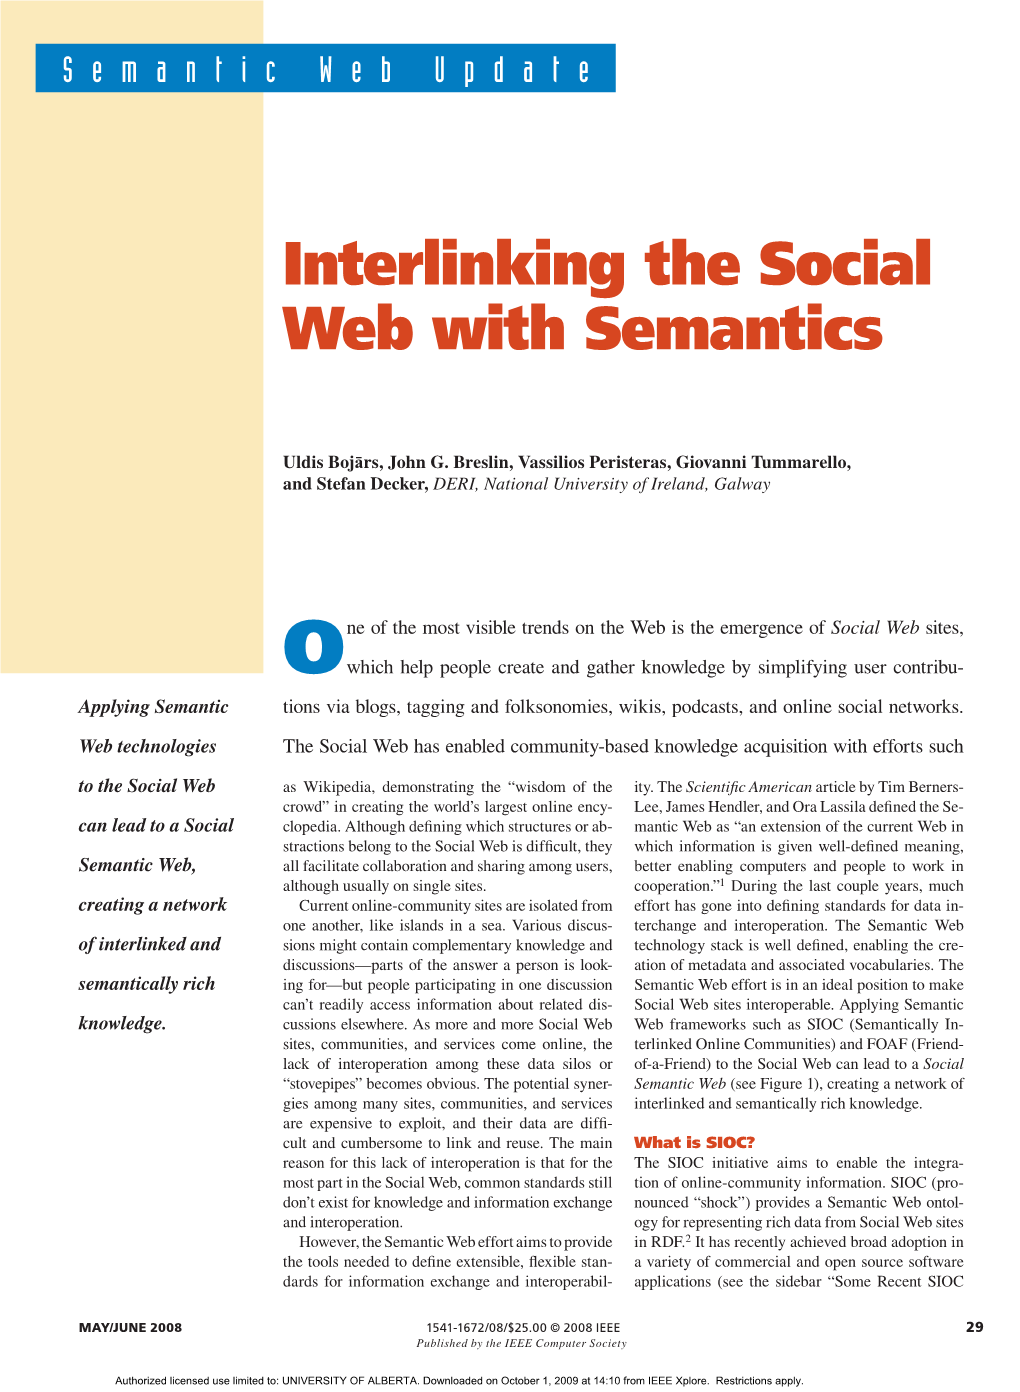 Interlinking the Social Web with Semantics